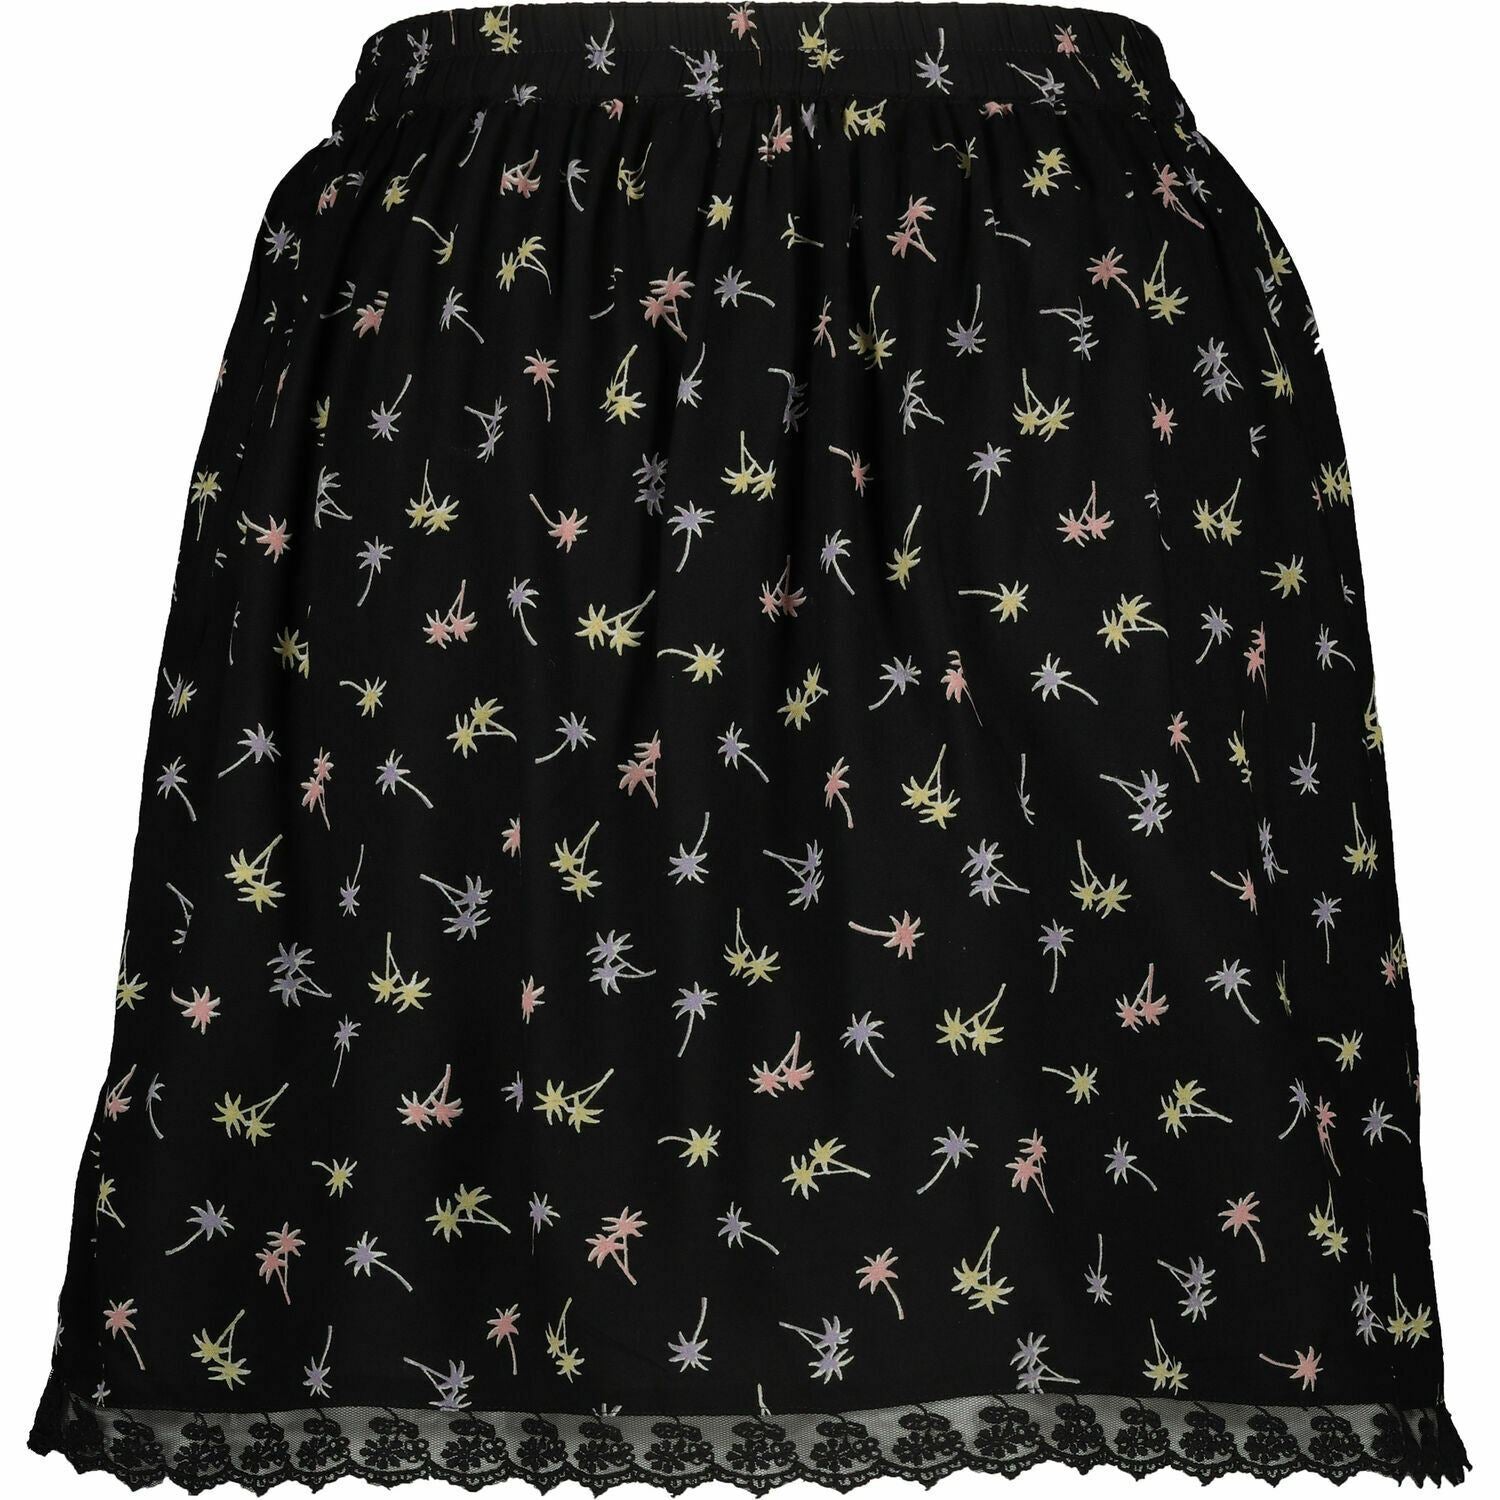 SUPERDRY Women's SERENA DITSY Skirt, Black/Palm Tree Print, size XS / UK 8